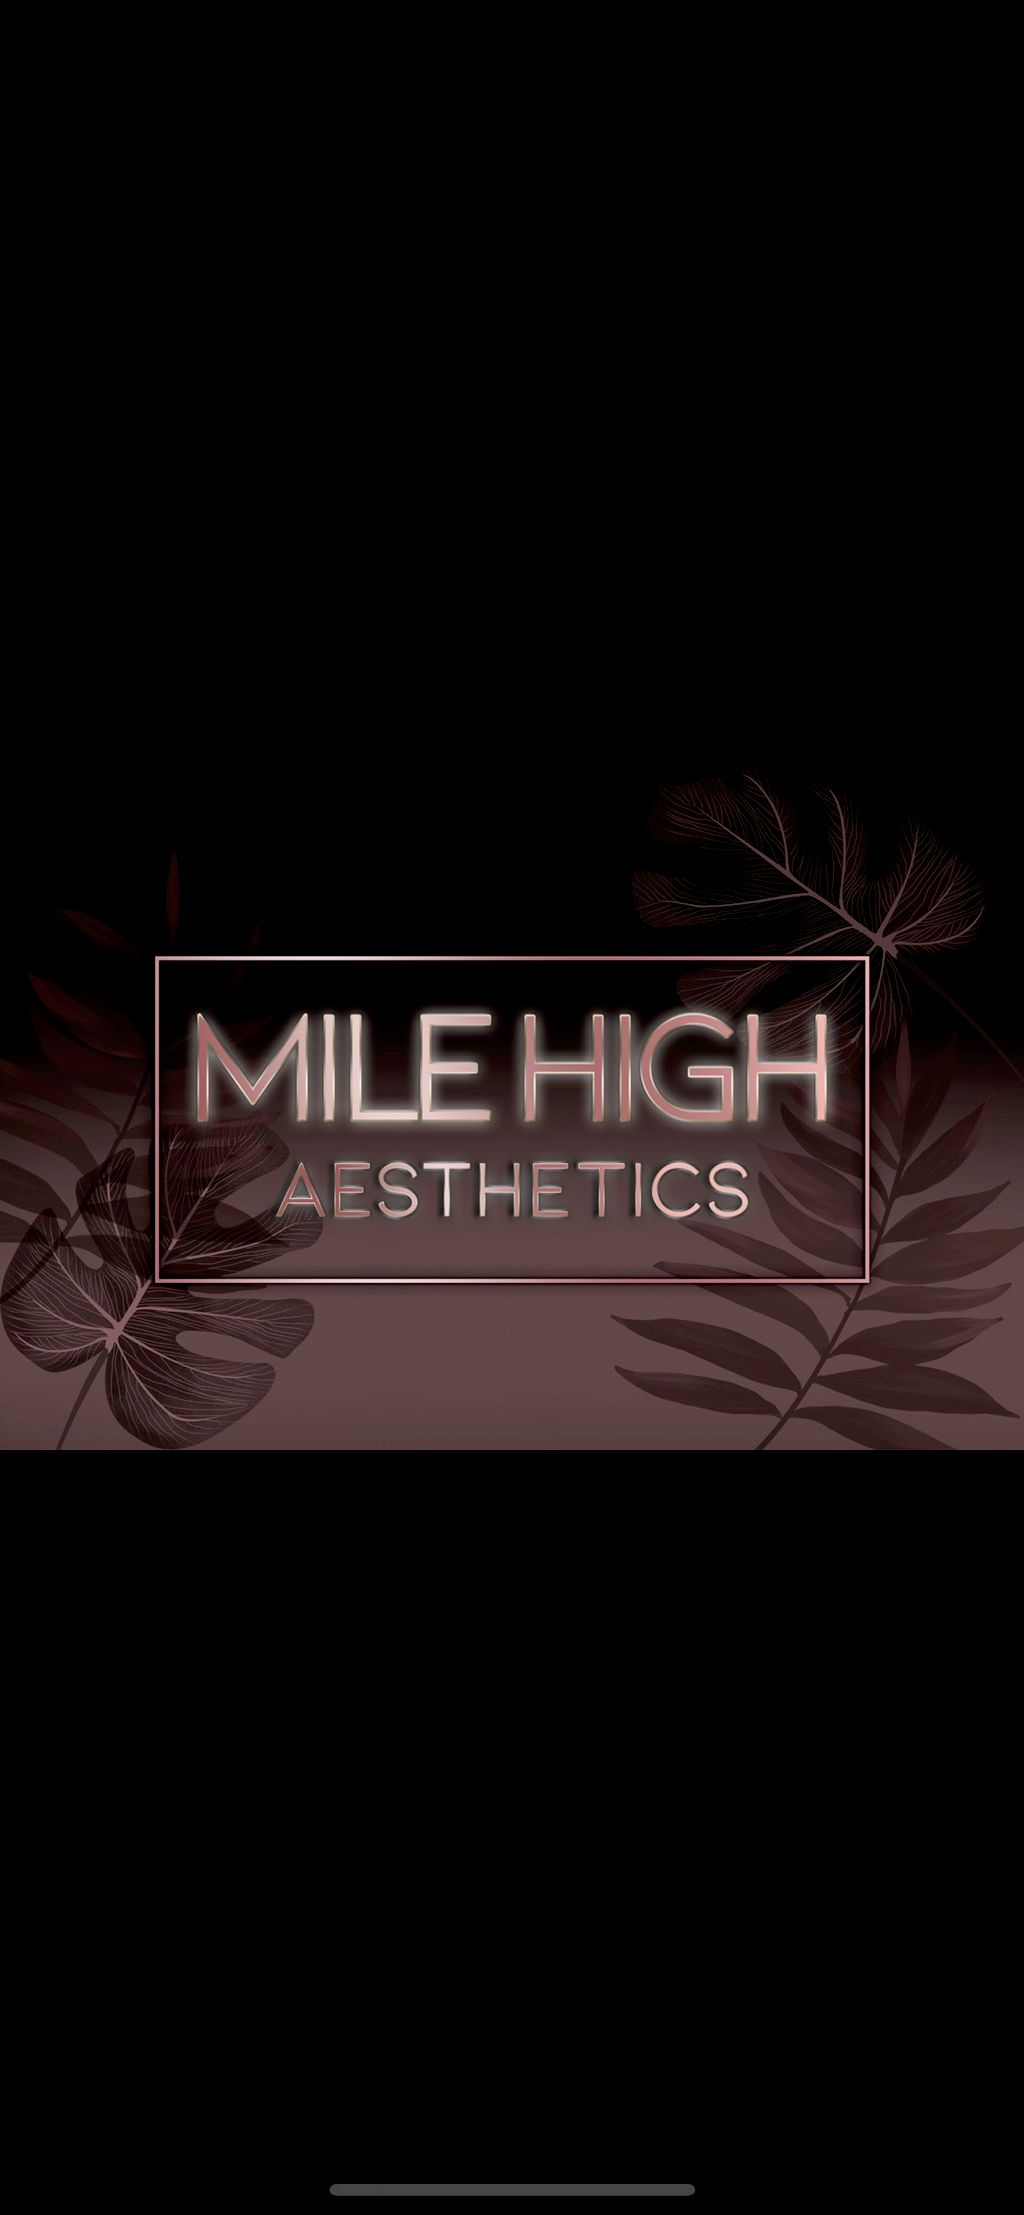 Mile High Aesthetics